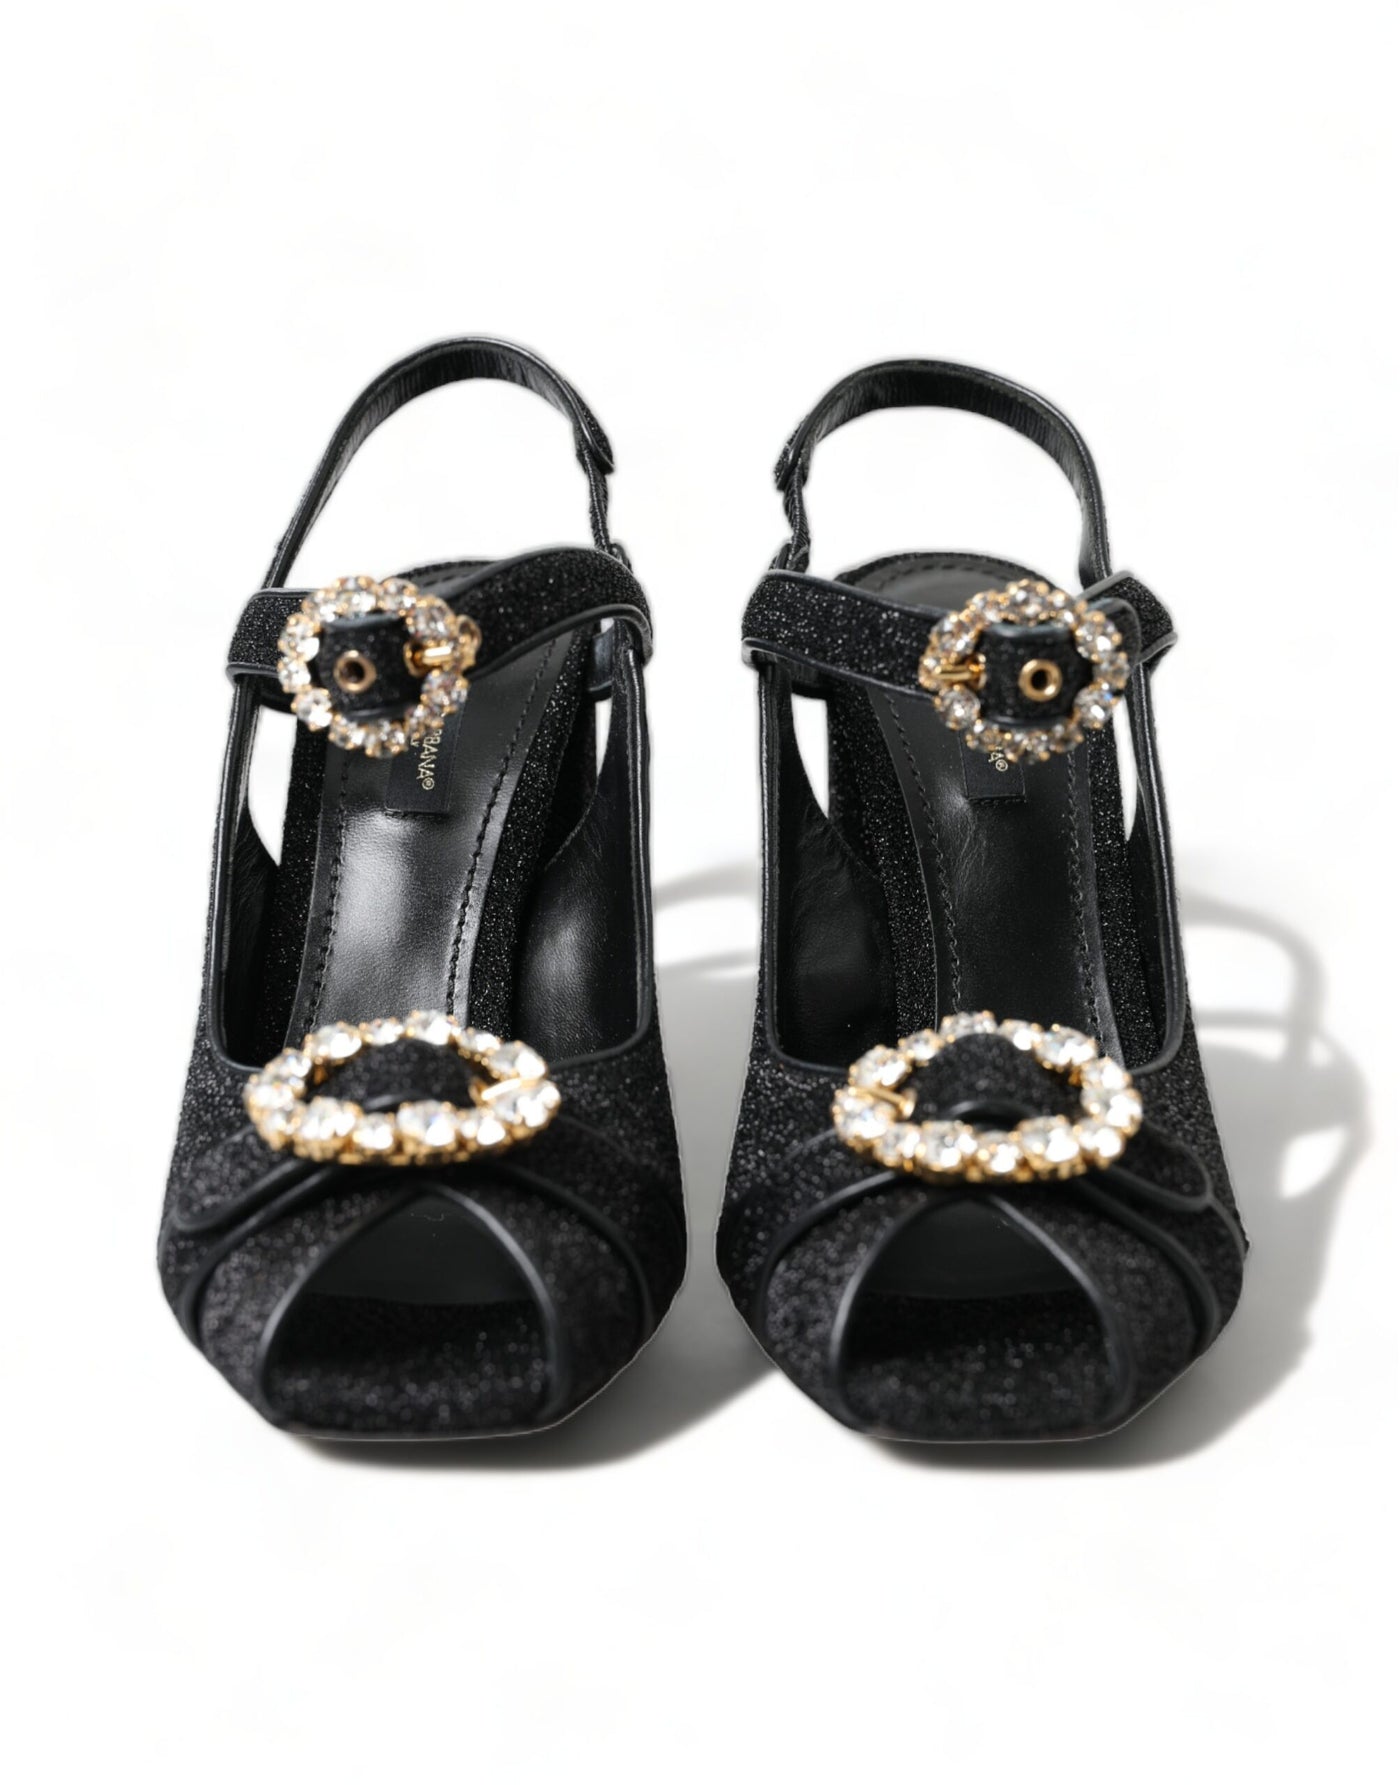 Black Crystal Ankle Strap Sandals Shoes